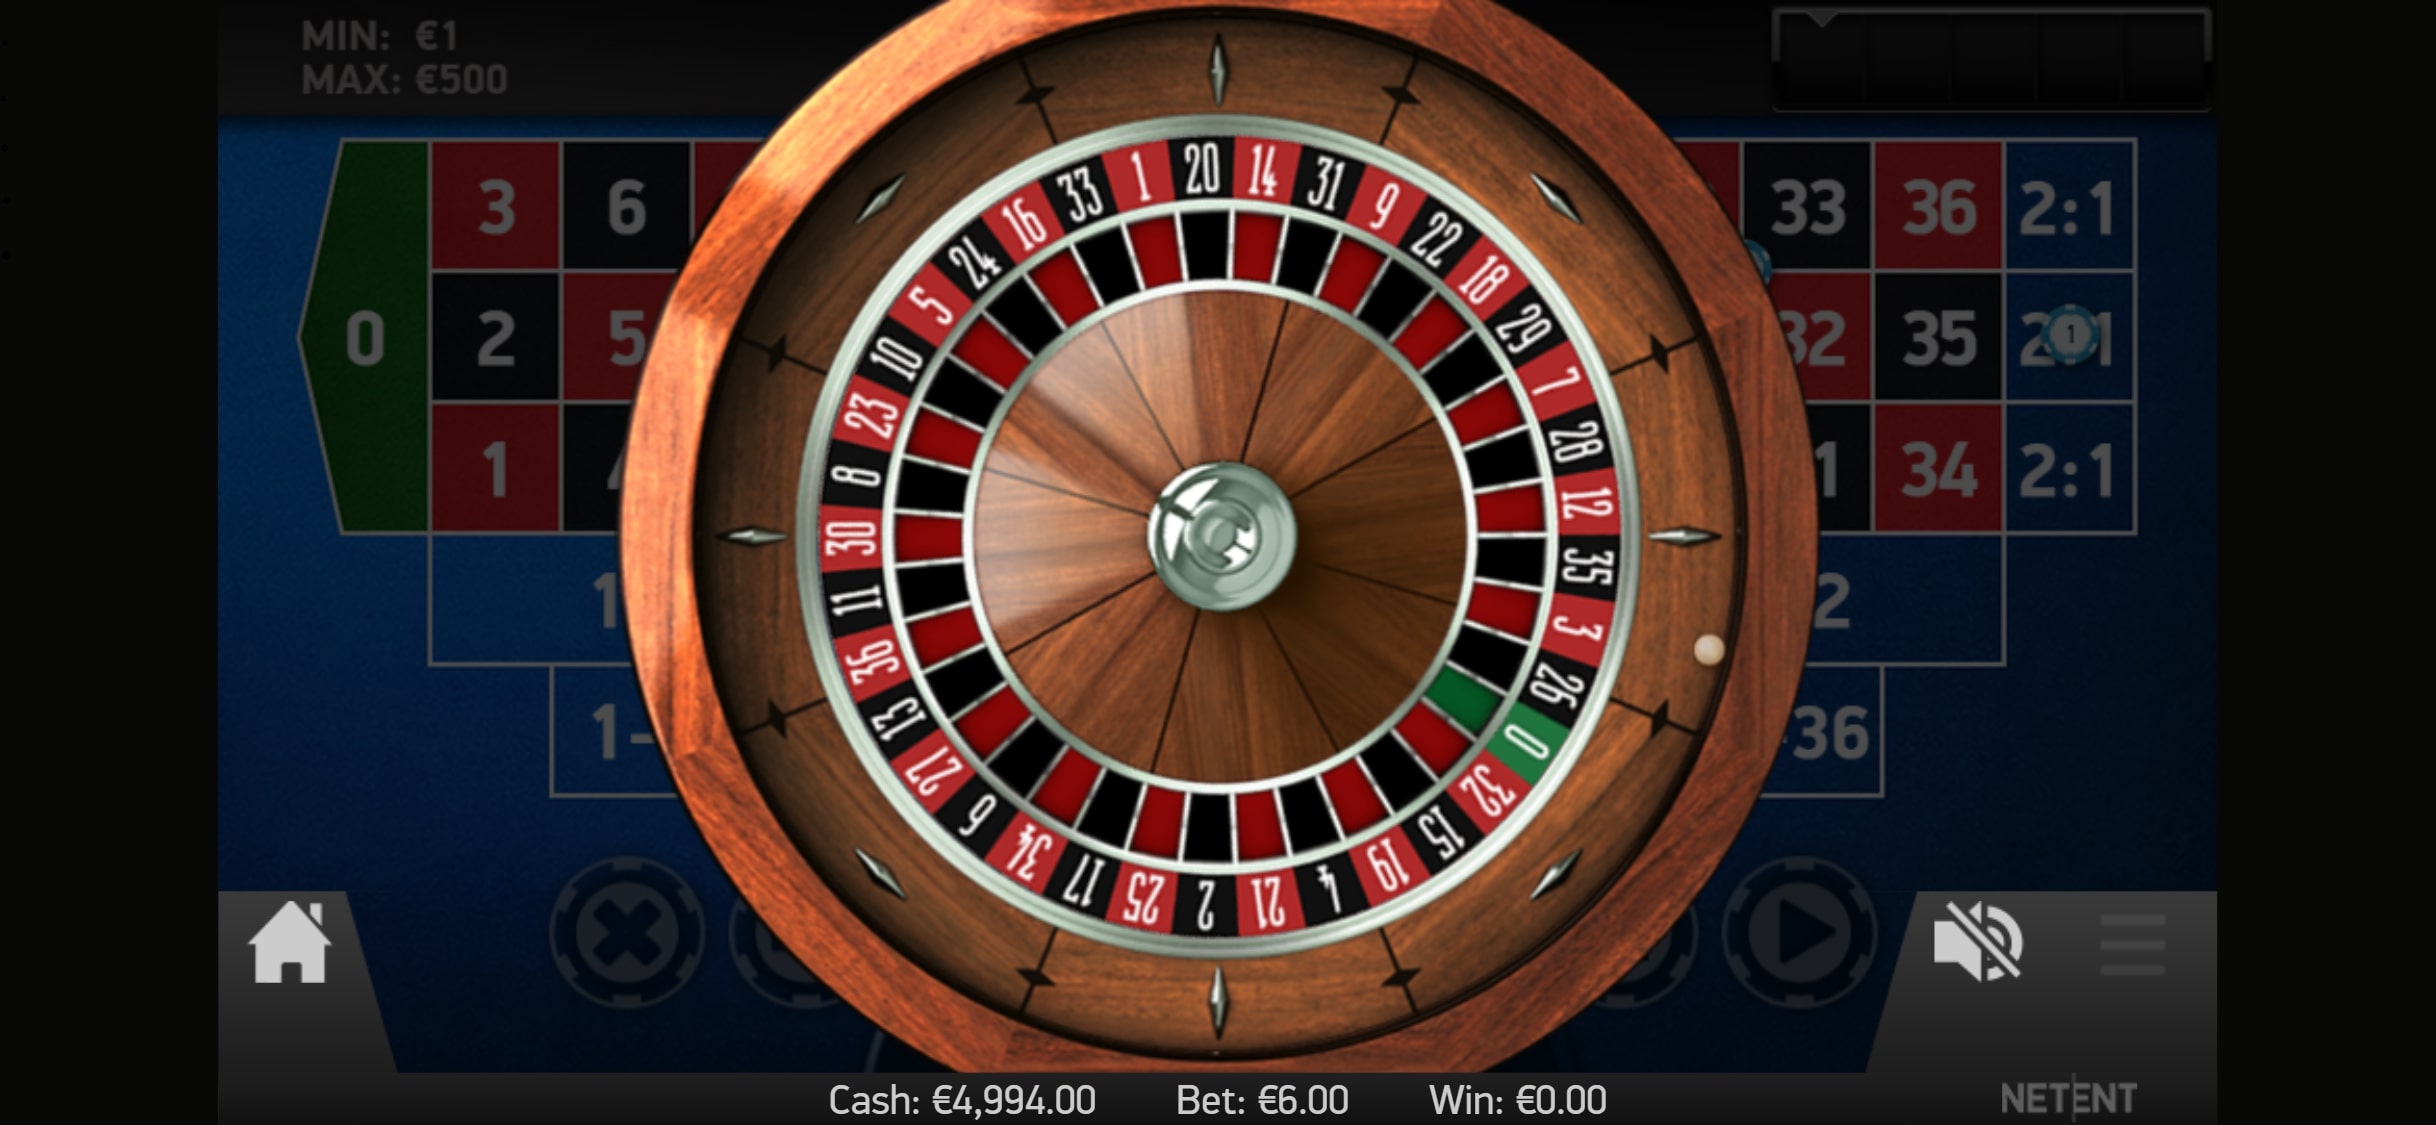 Premier Live Casino Mobile Casino Games Review